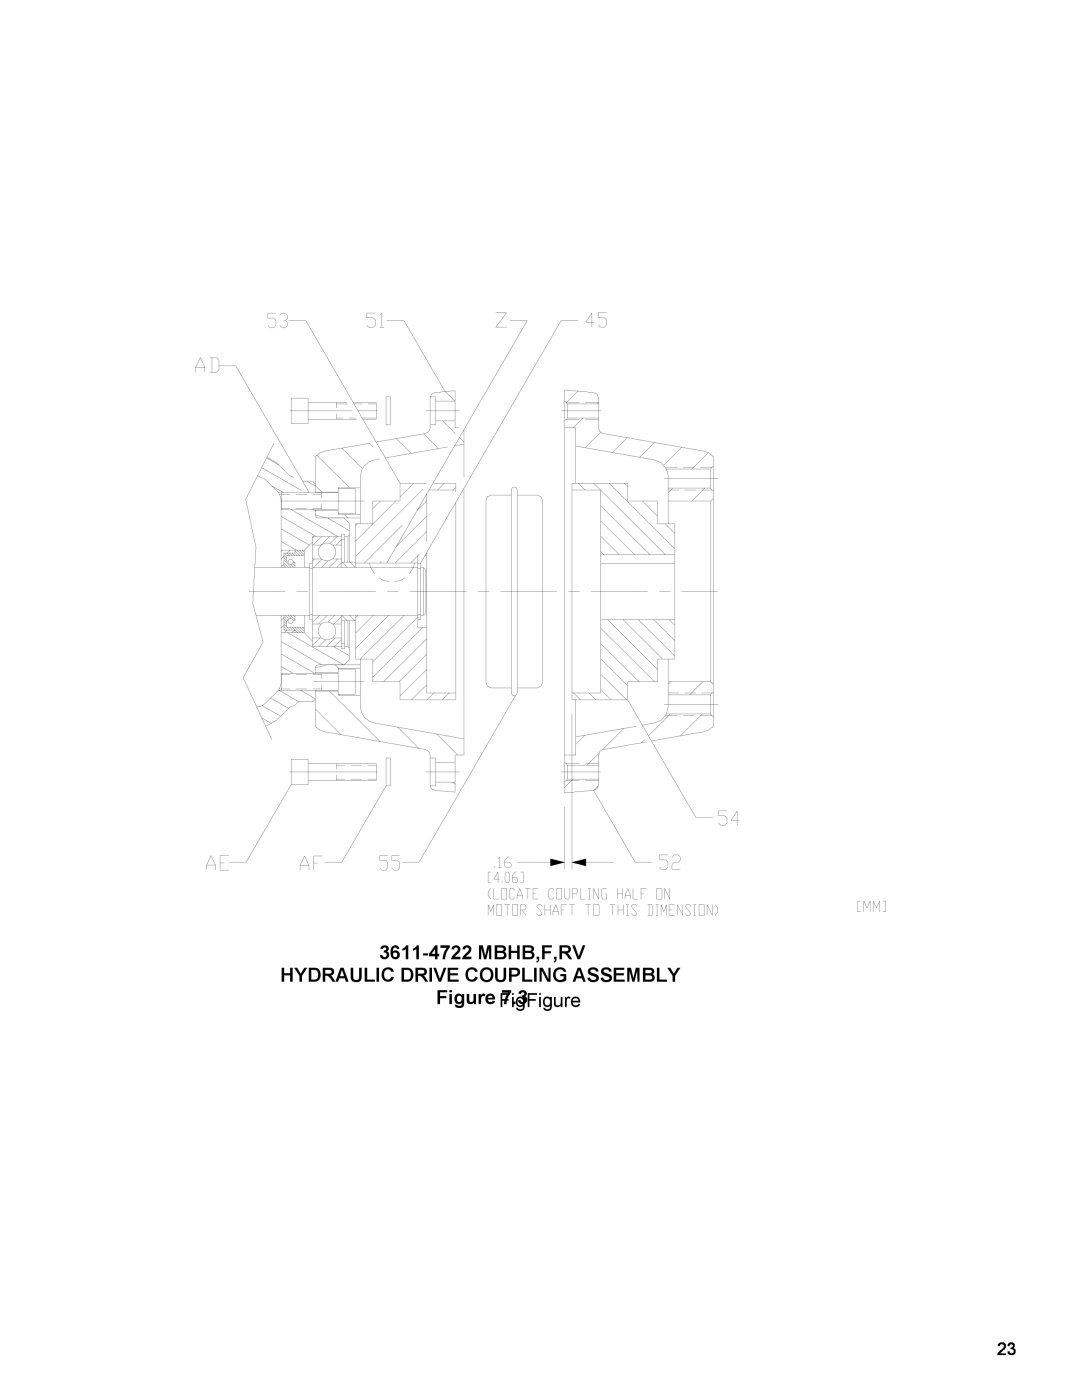 Roper G12-436 owner manual 3611-4722MBHB,F,RV, Hydraulic Drive Coupling Assembly, Figure FigFigure7.3 